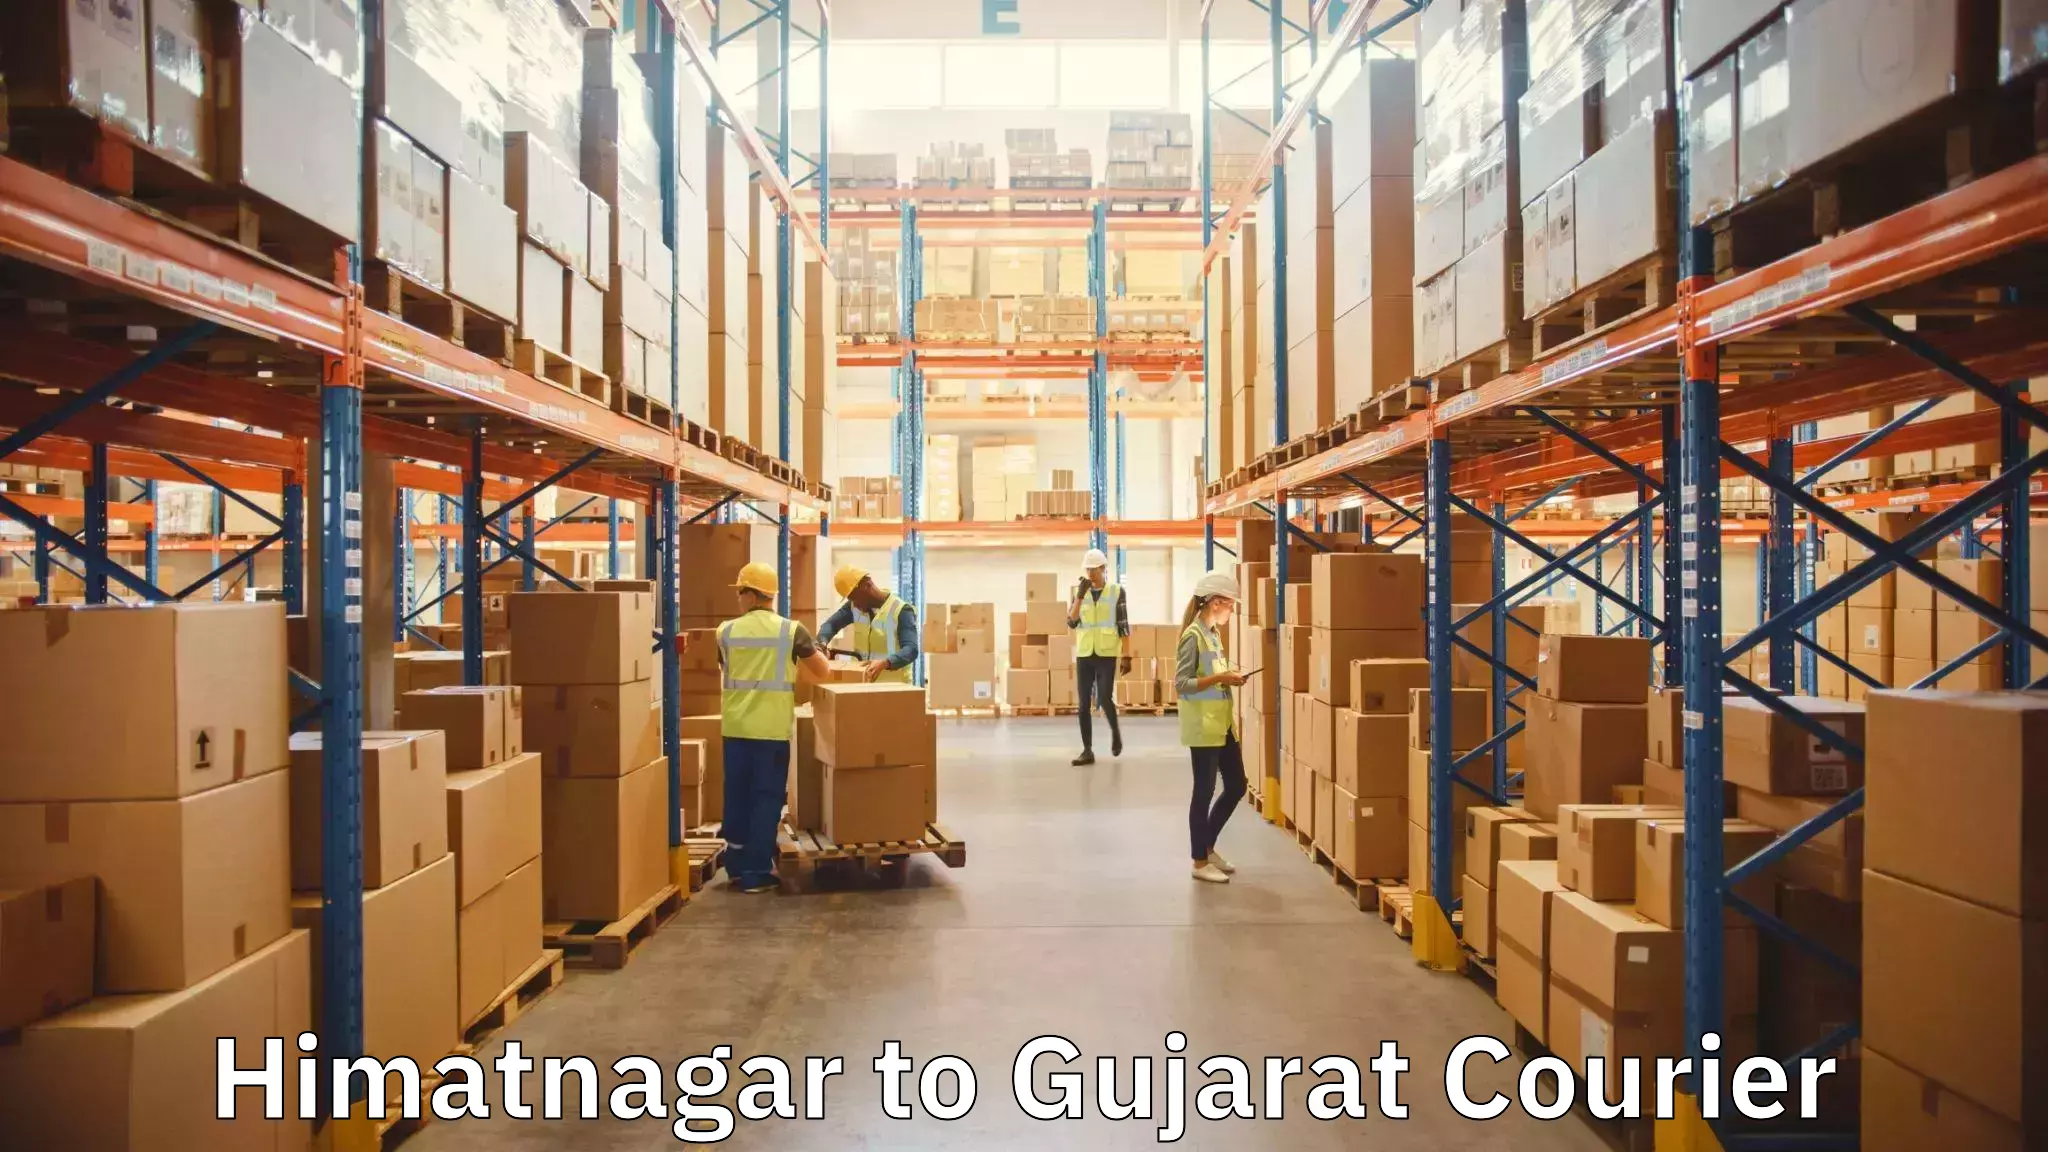 Trusted moving company Himatnagar to Girgadhada